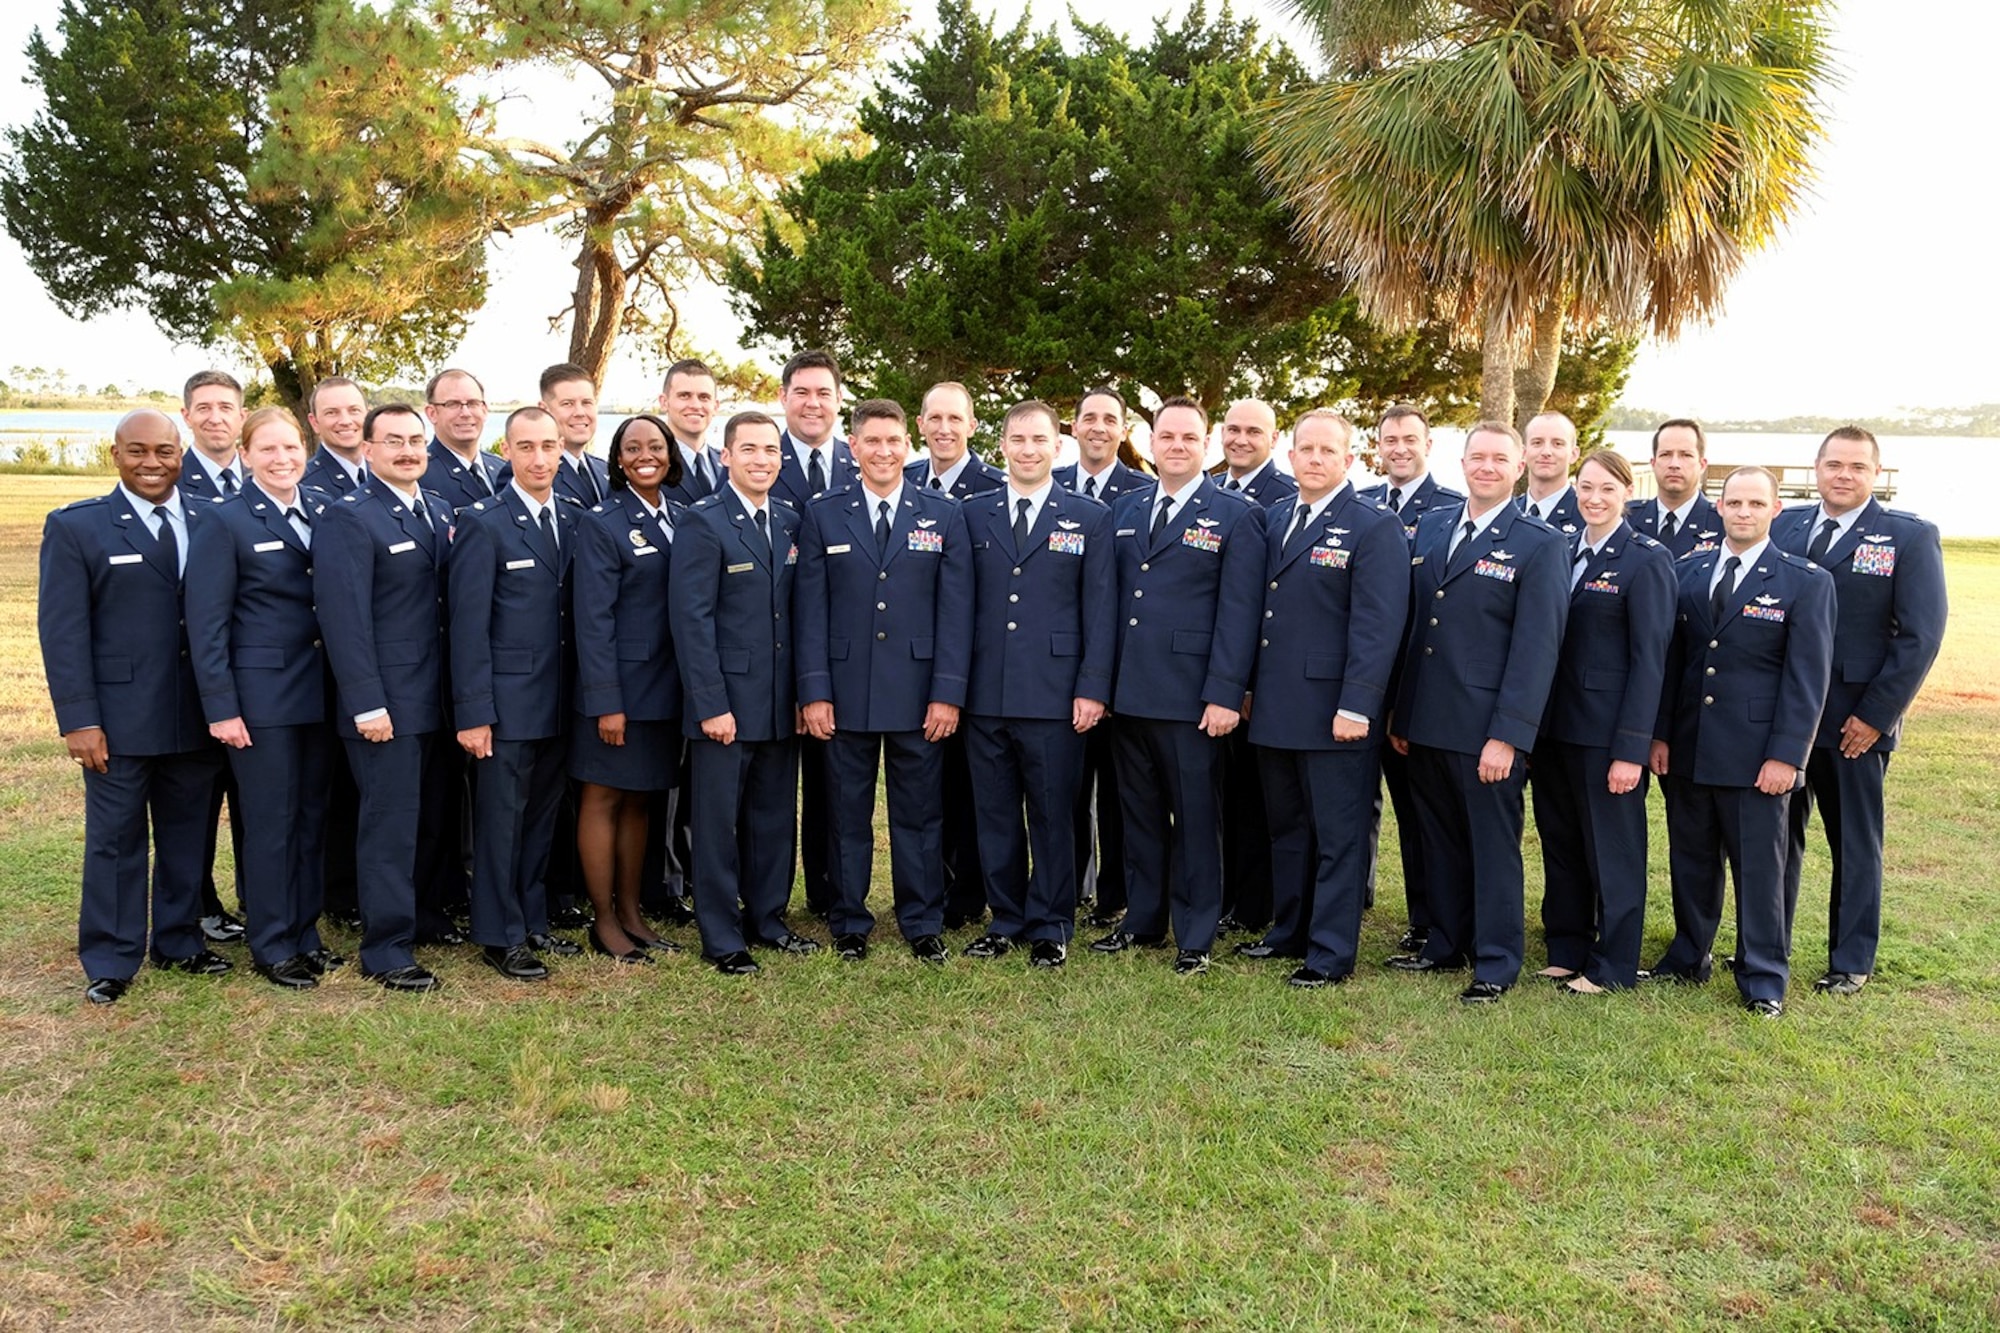 United States Air Force’s inaugural class of Multi-Domain Warfare Officer Initial Skills Training graduates, Class 19-B